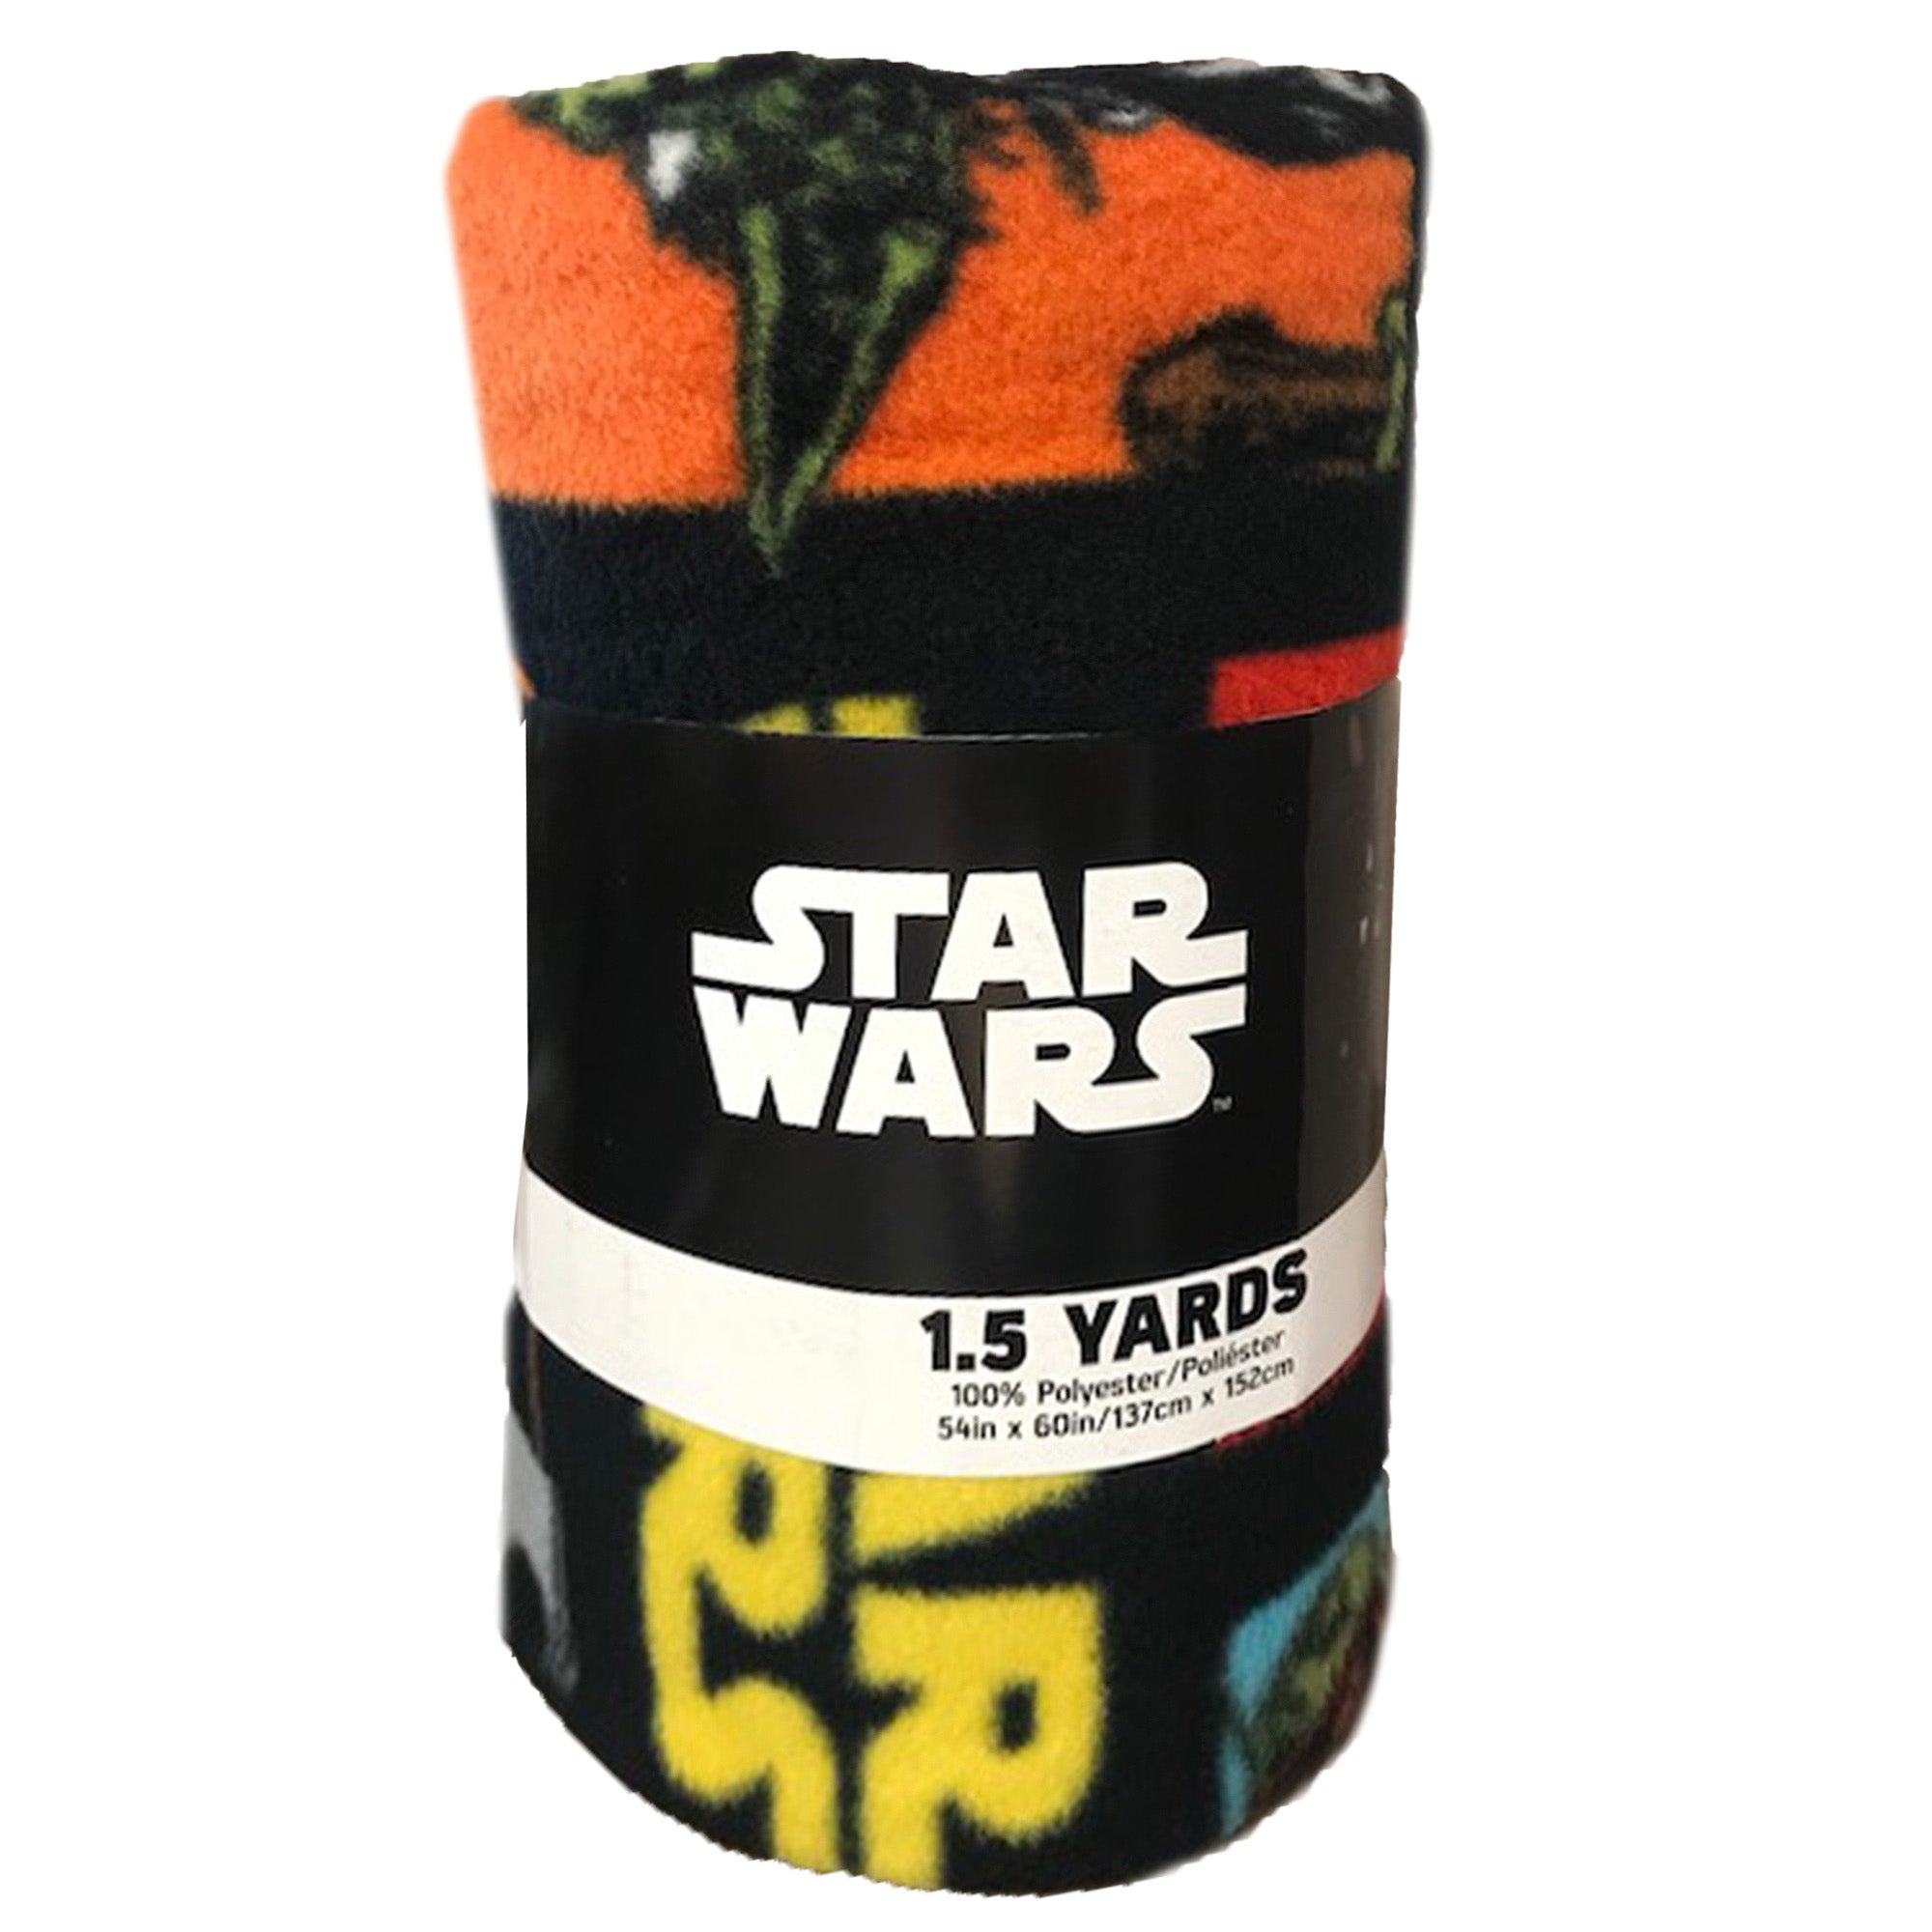 Star Wars - Characters 1.5 Yard Cut - 100% Polyester Fleece Fabric